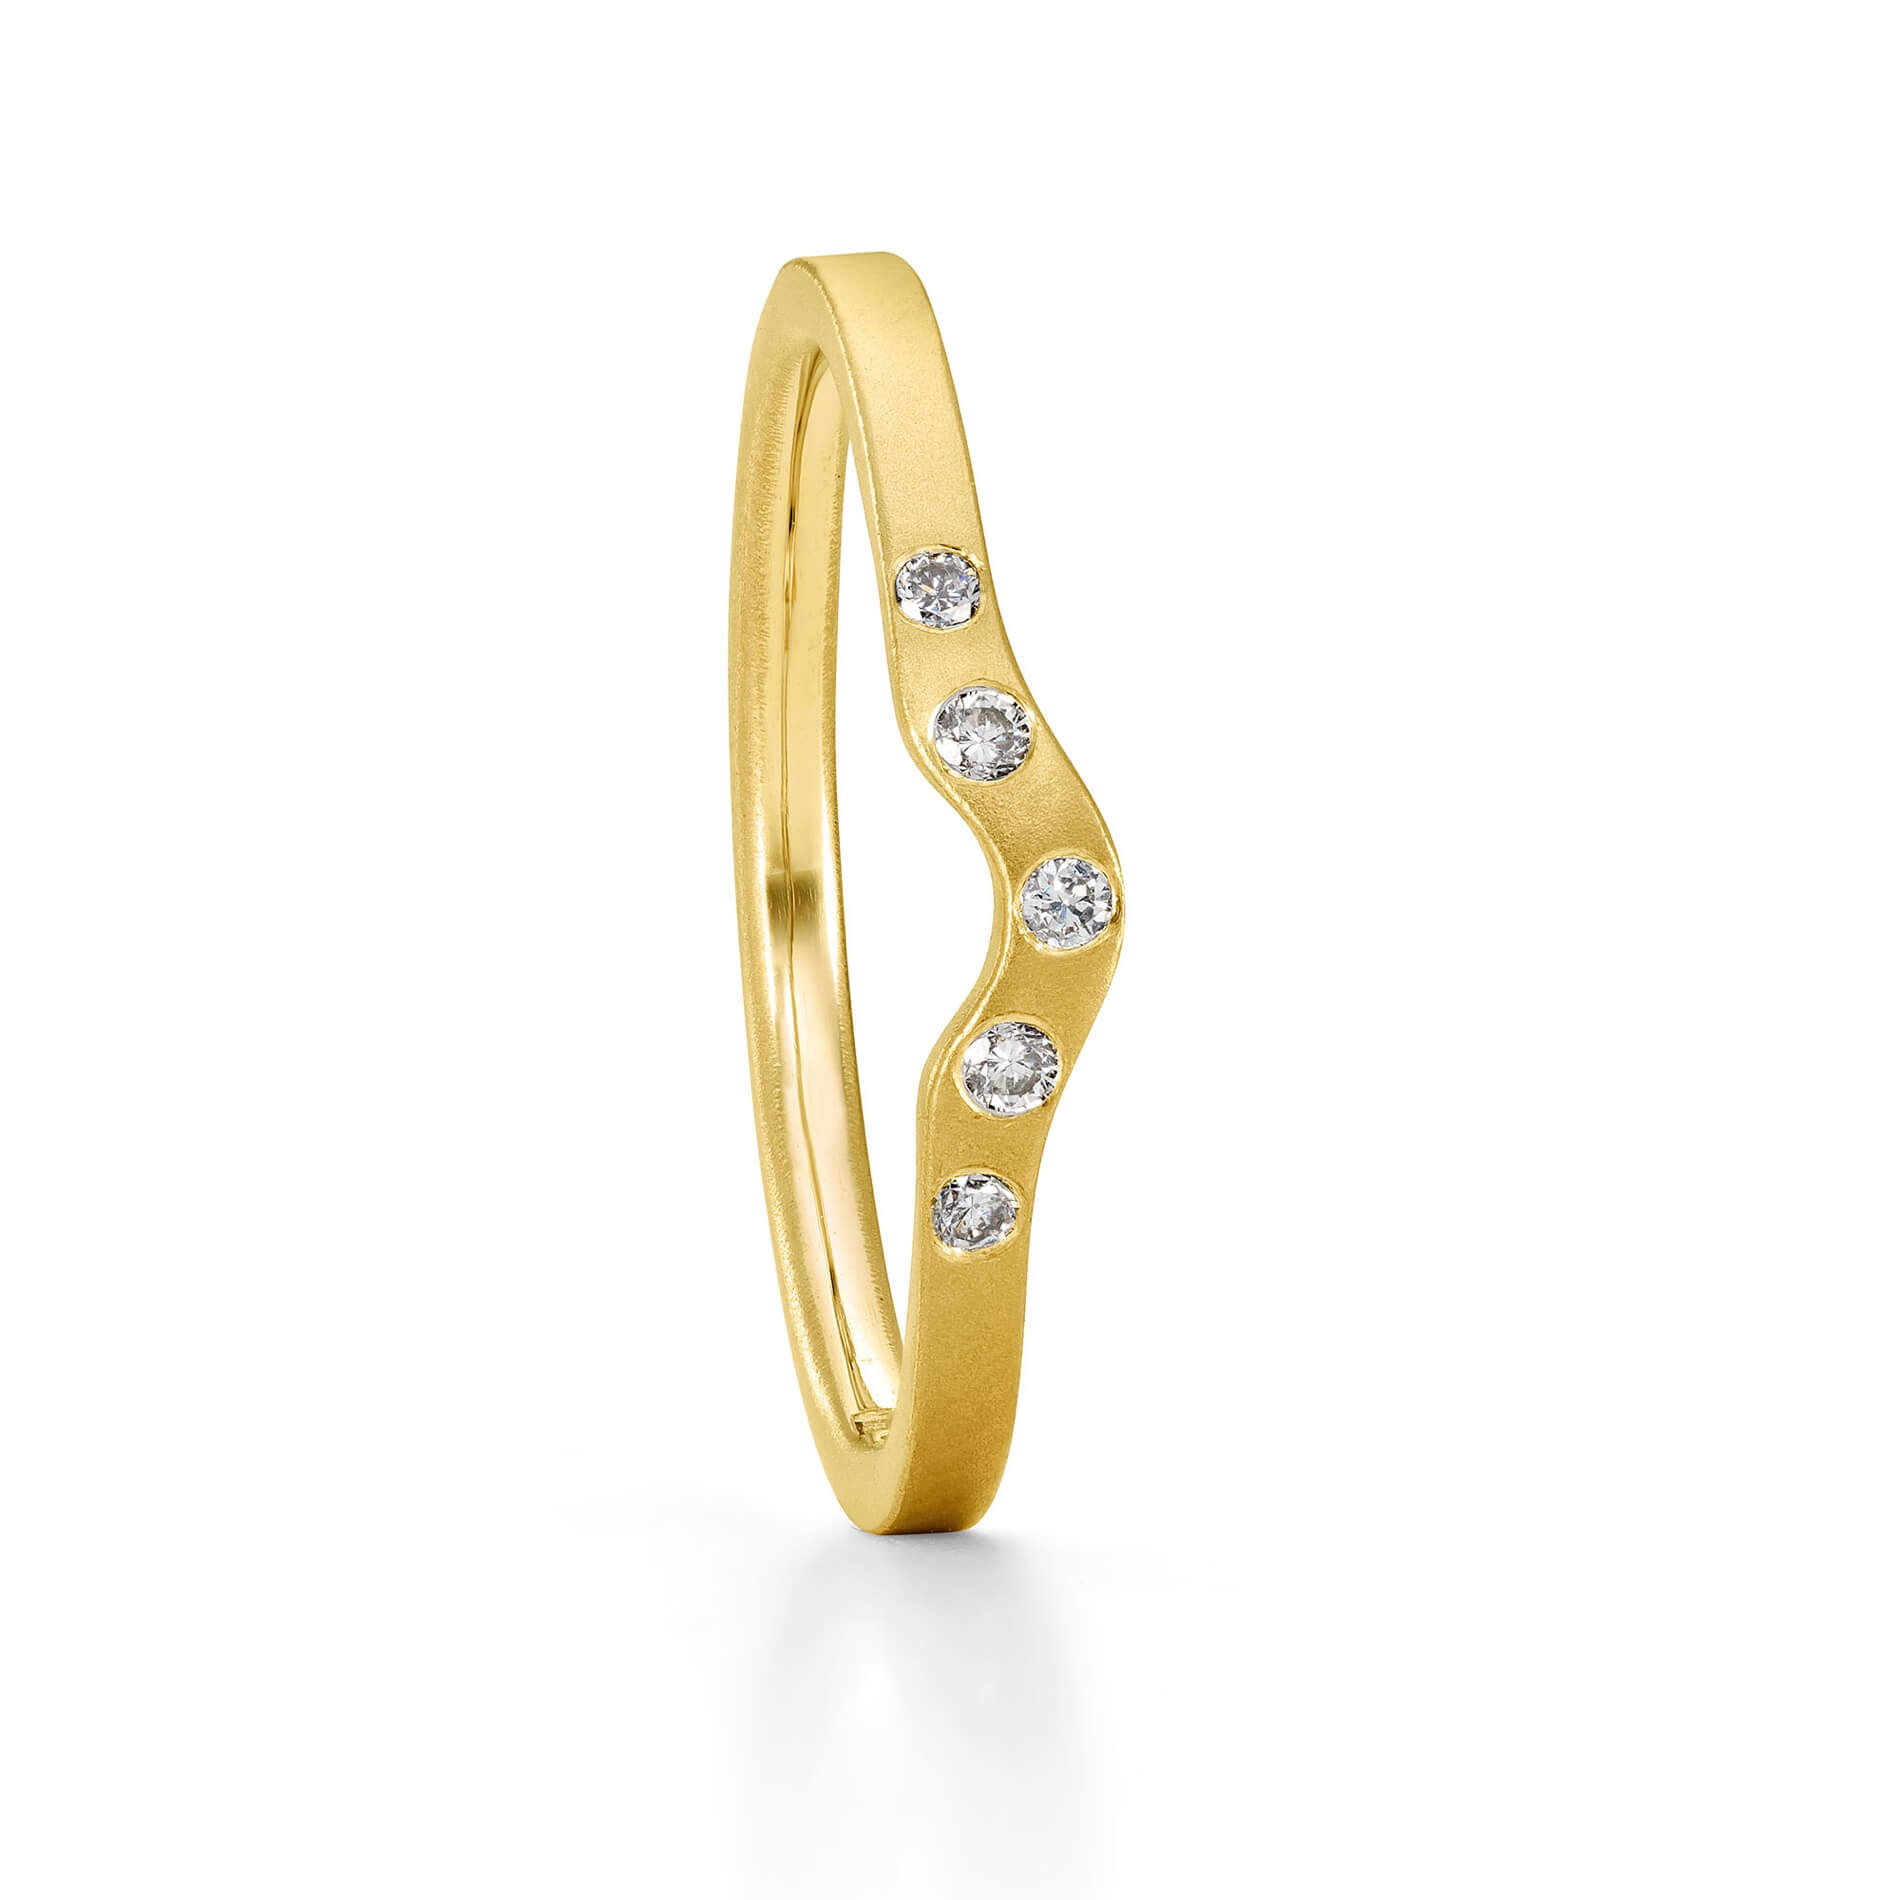 Diamond curved wedding ring by Jacks Turner